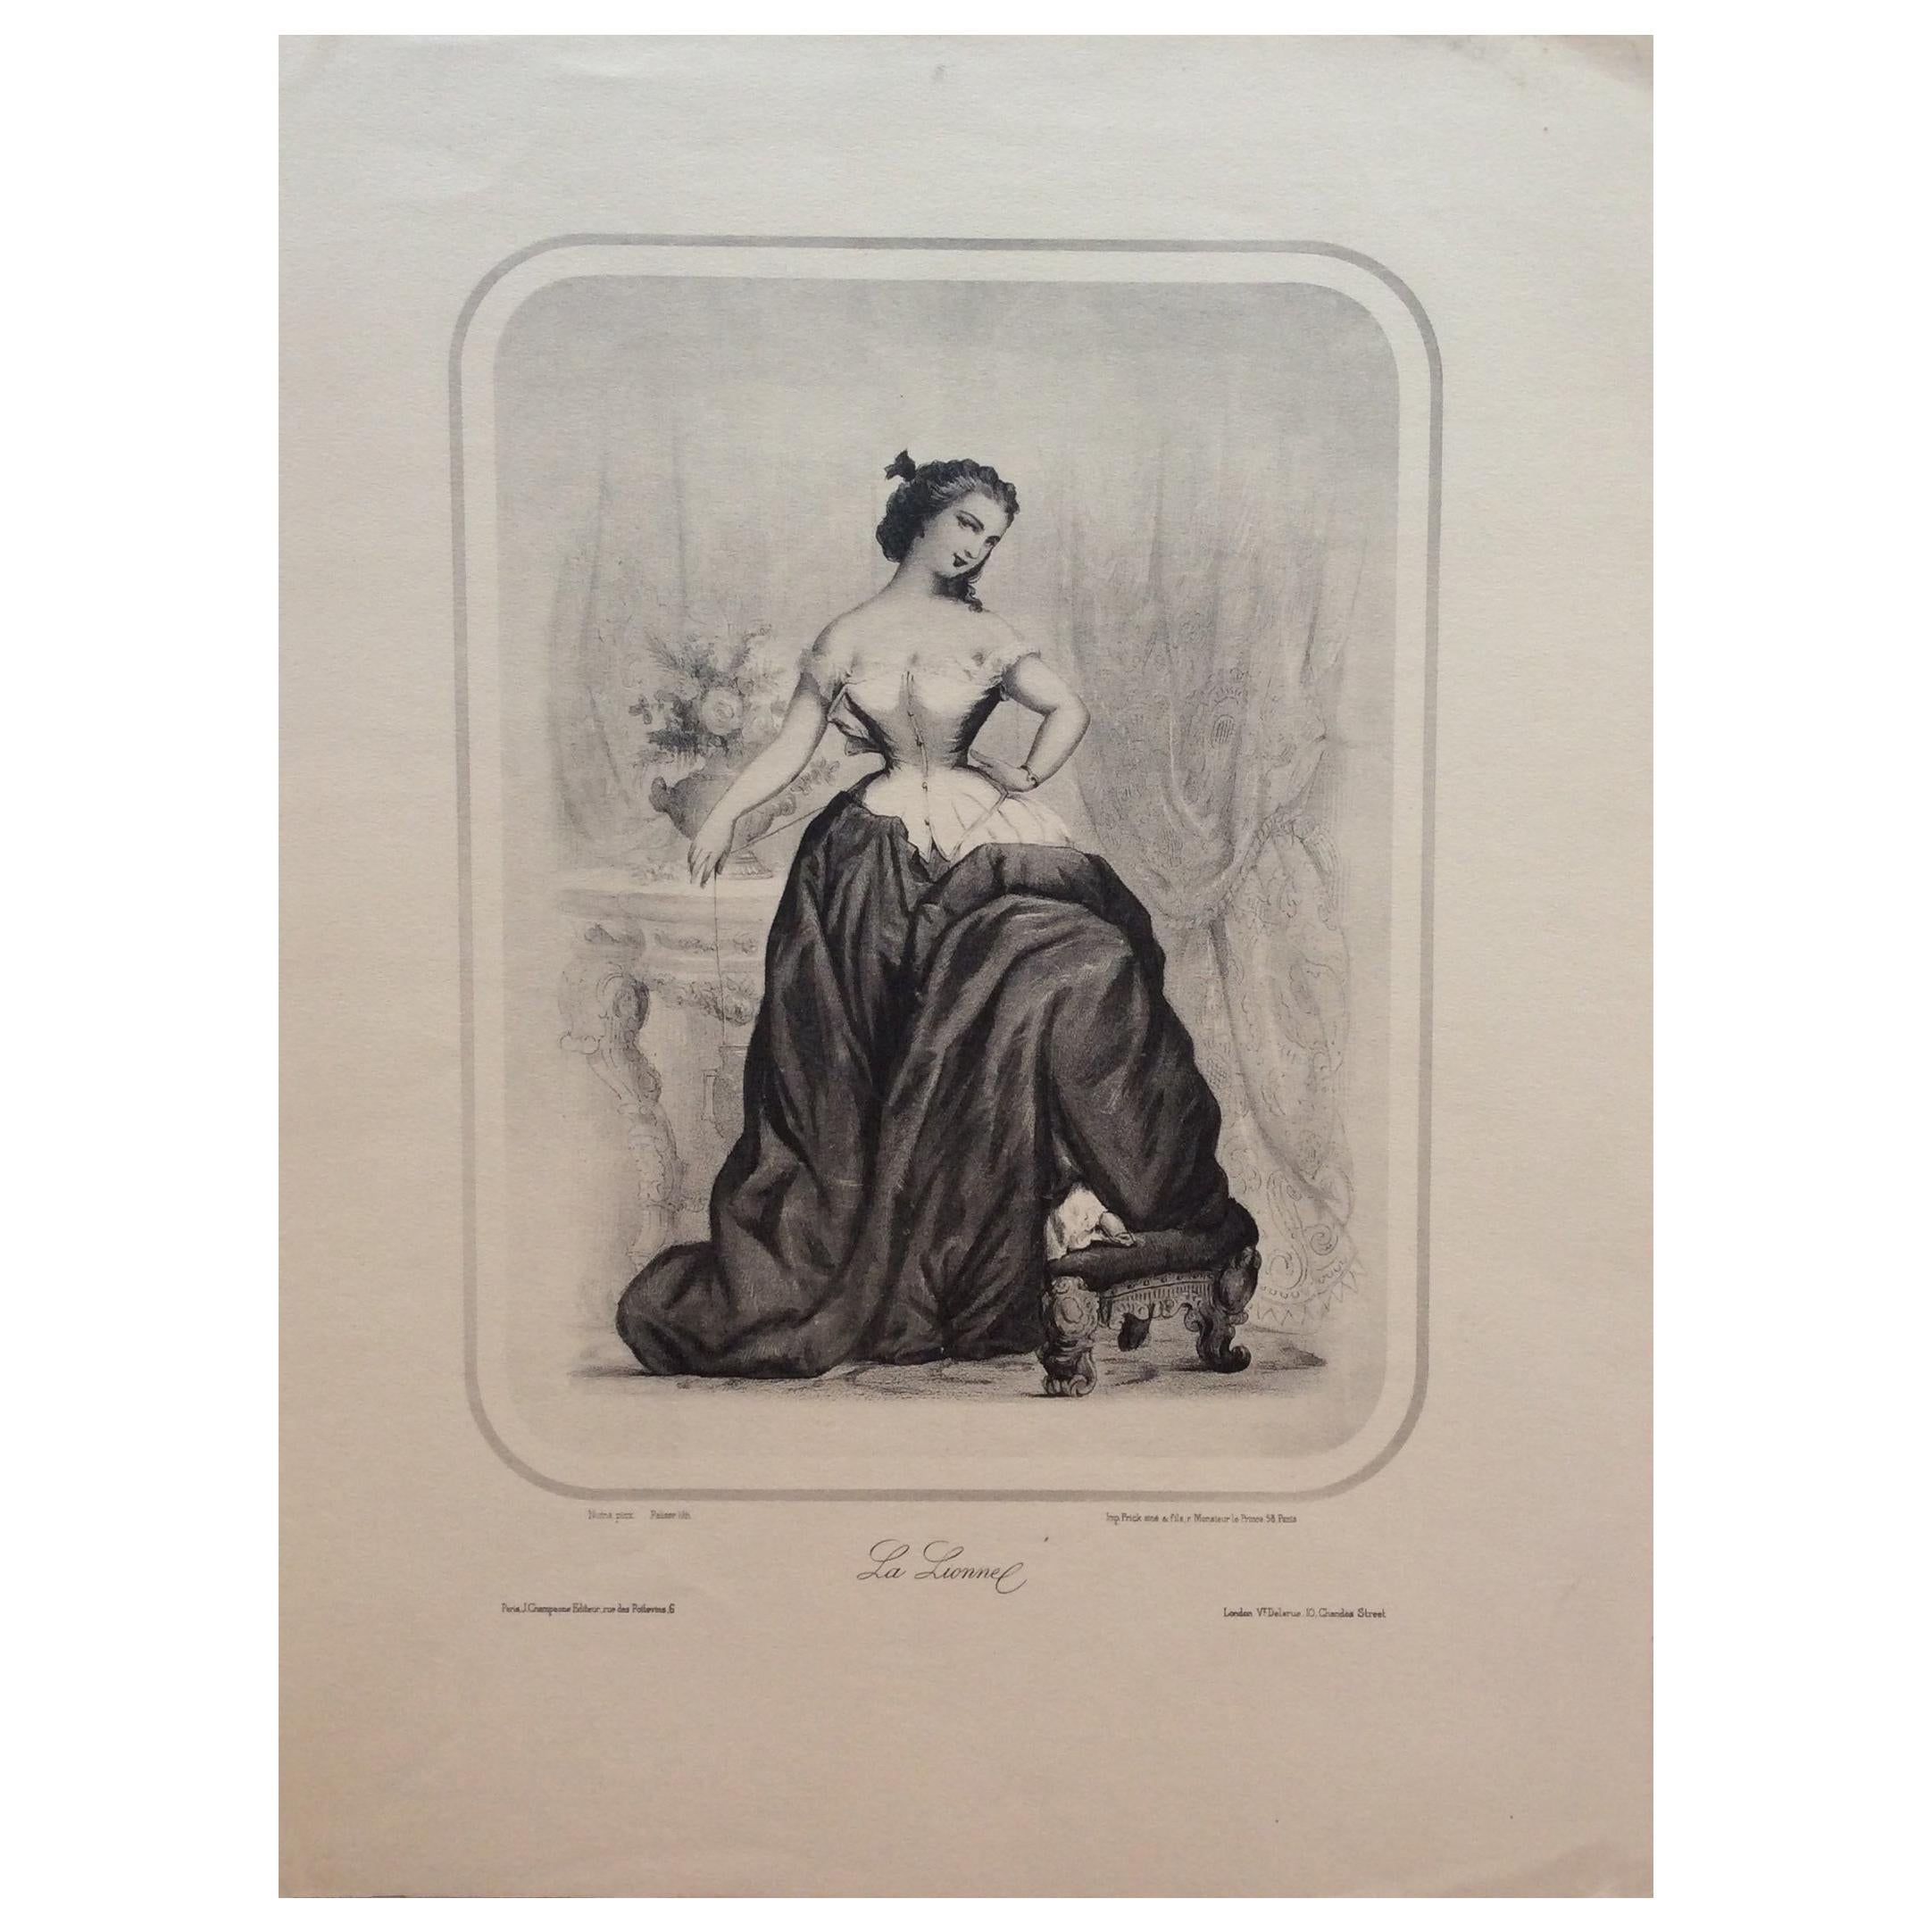 Original Early 20th Century Antique French “La Lionnel” Engraving Print